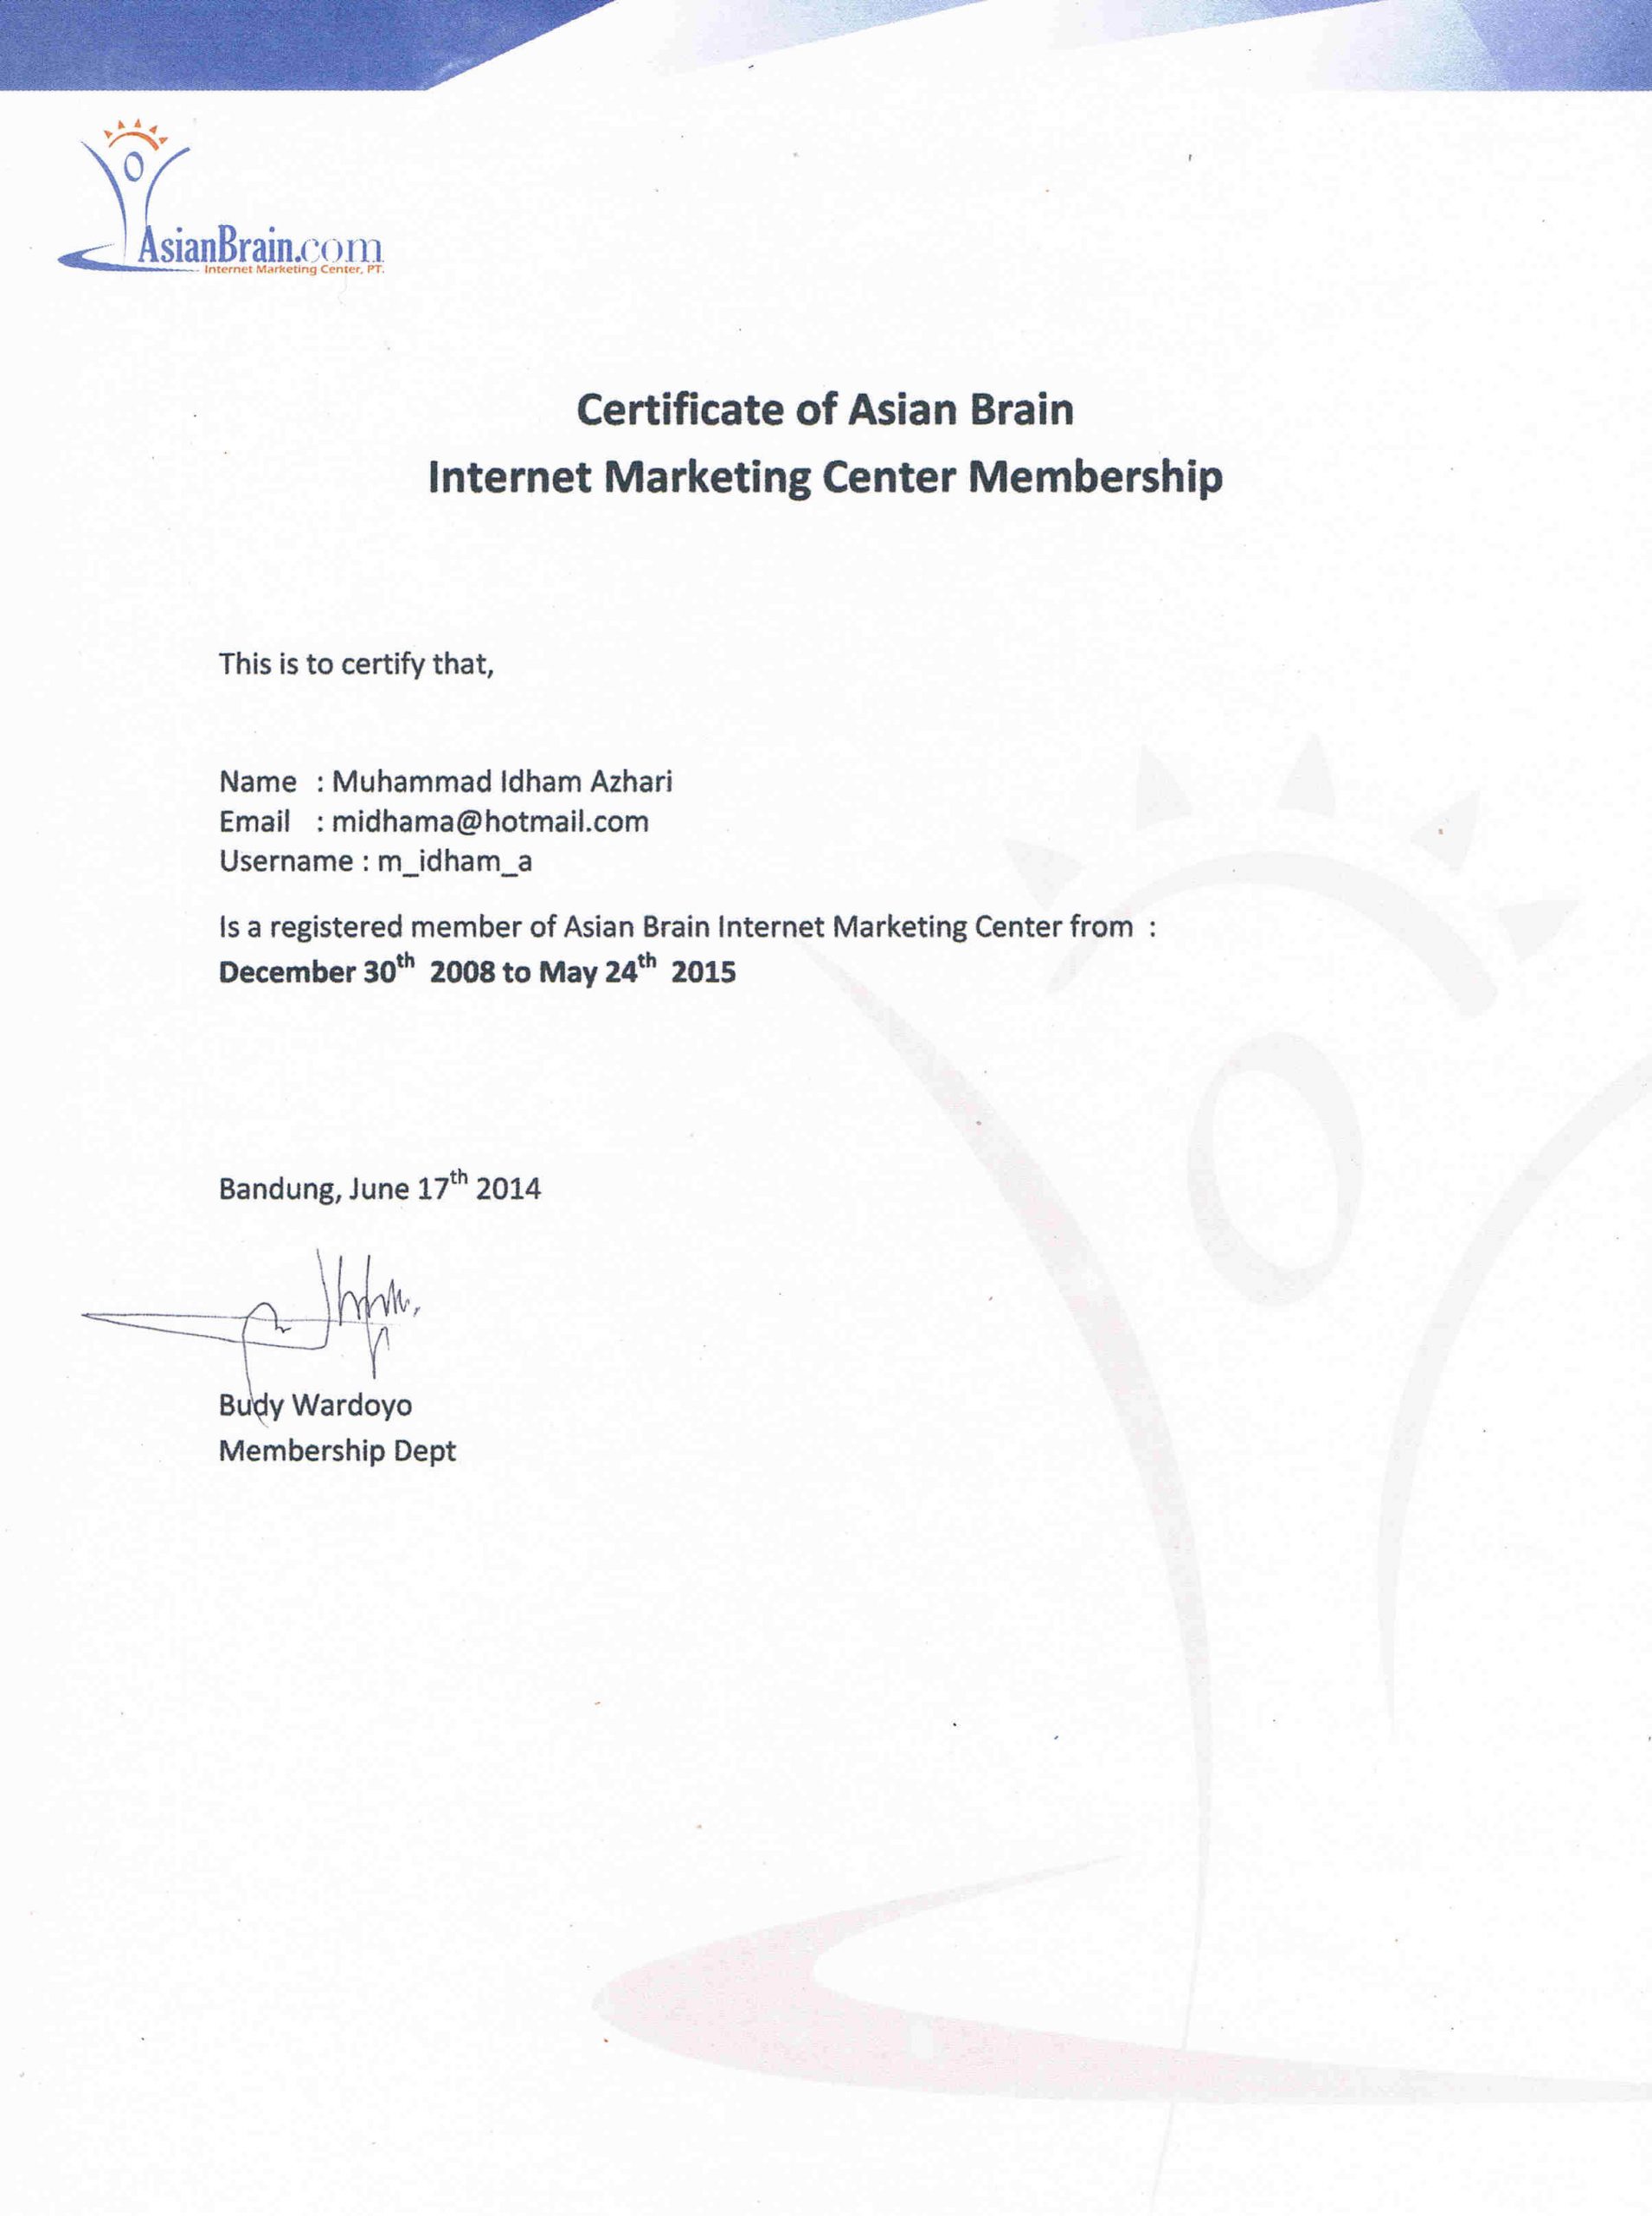 Certificate of Asian Brain Internet Marketing Center Membership